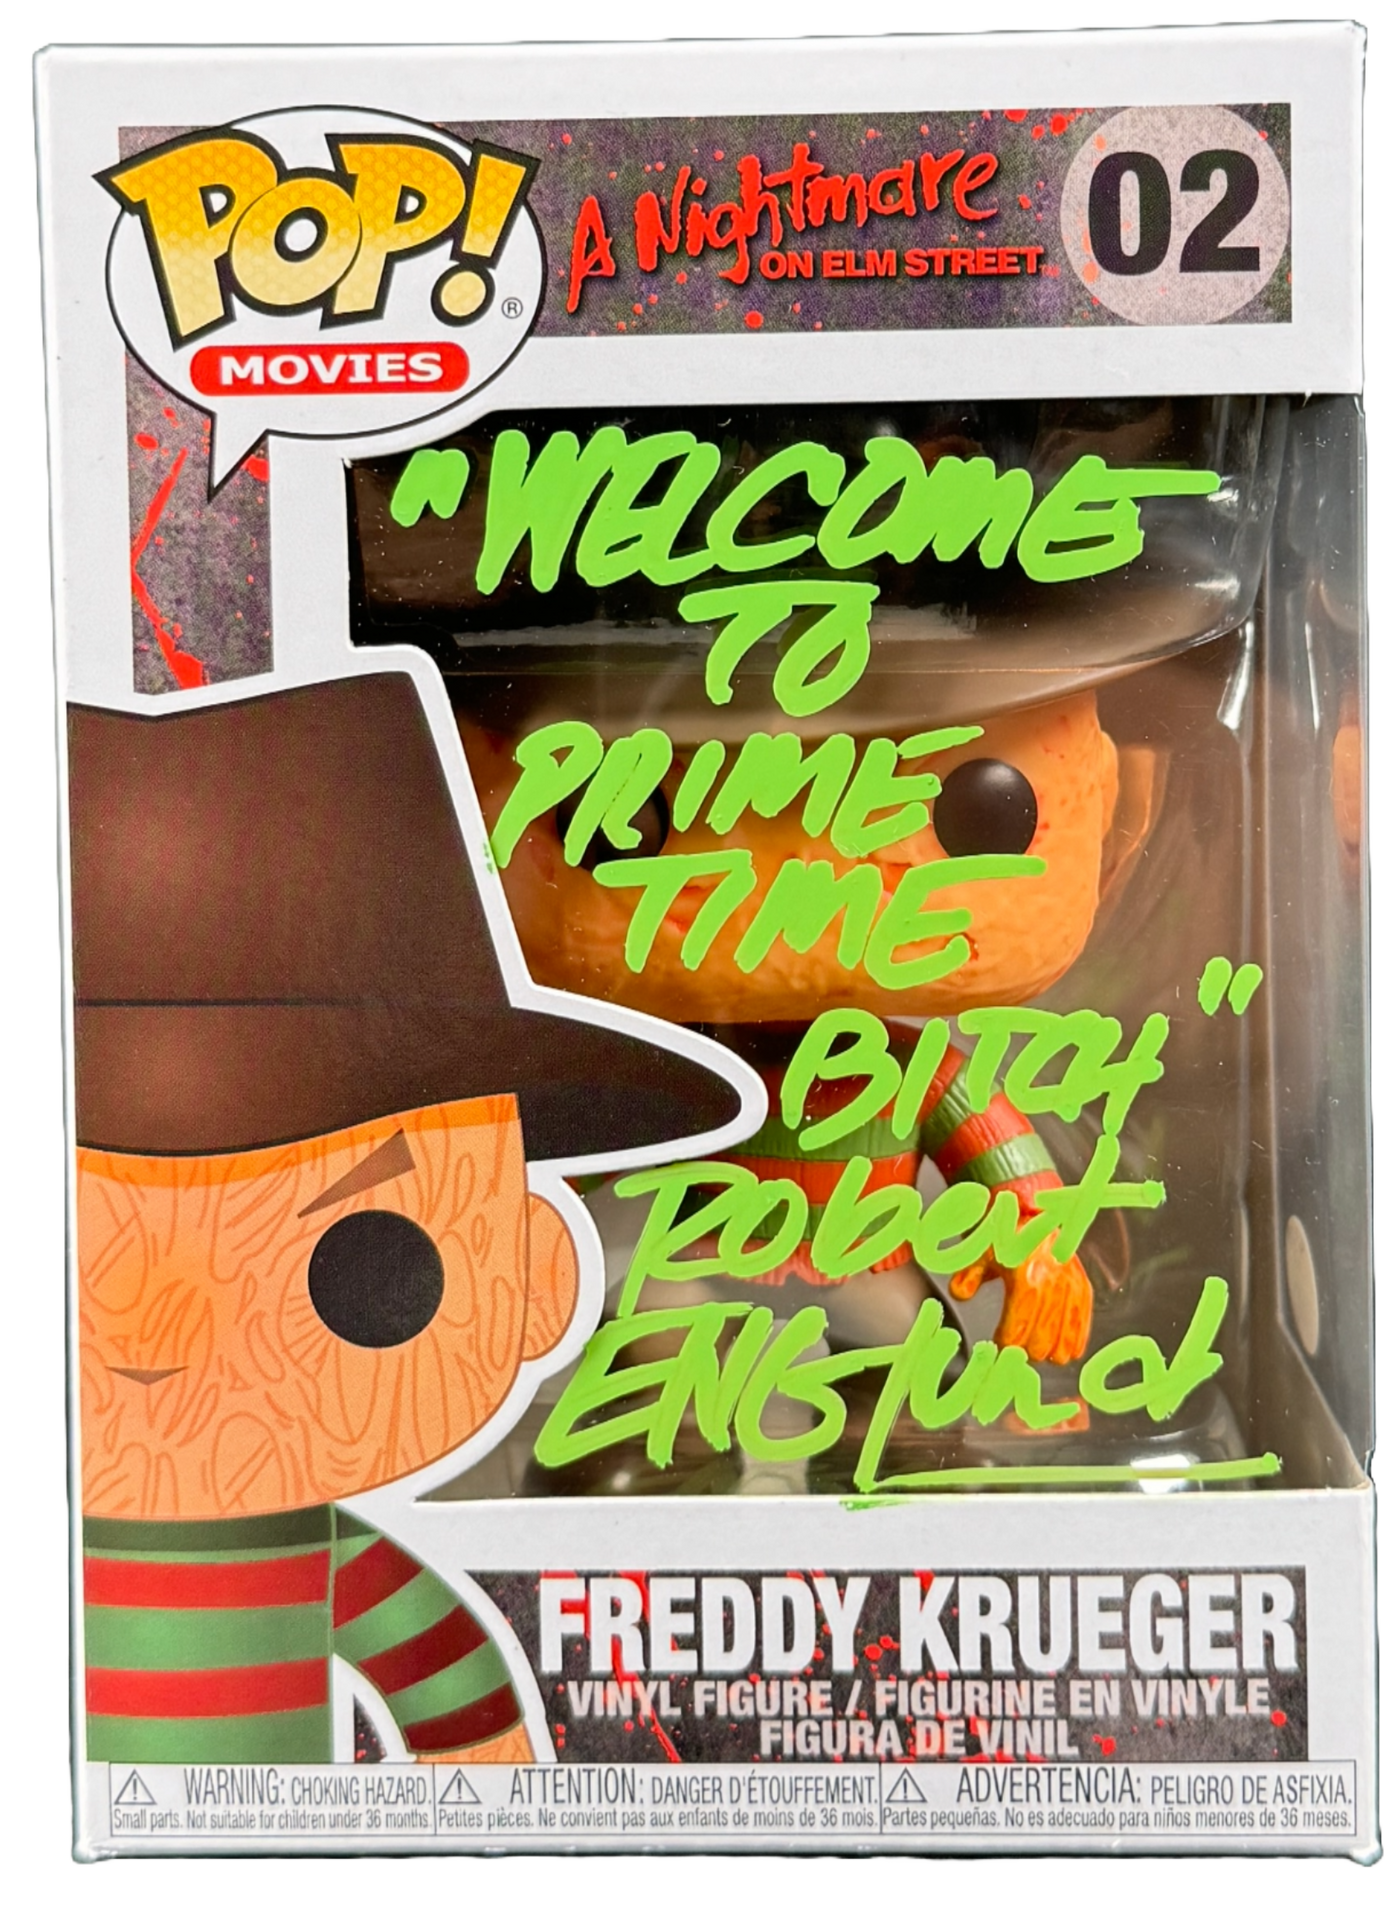 Robert Englund "Freddy Krueger" Signed Funko Pop #02 A Nightmare on Elm Street Autographed JSA COA 4